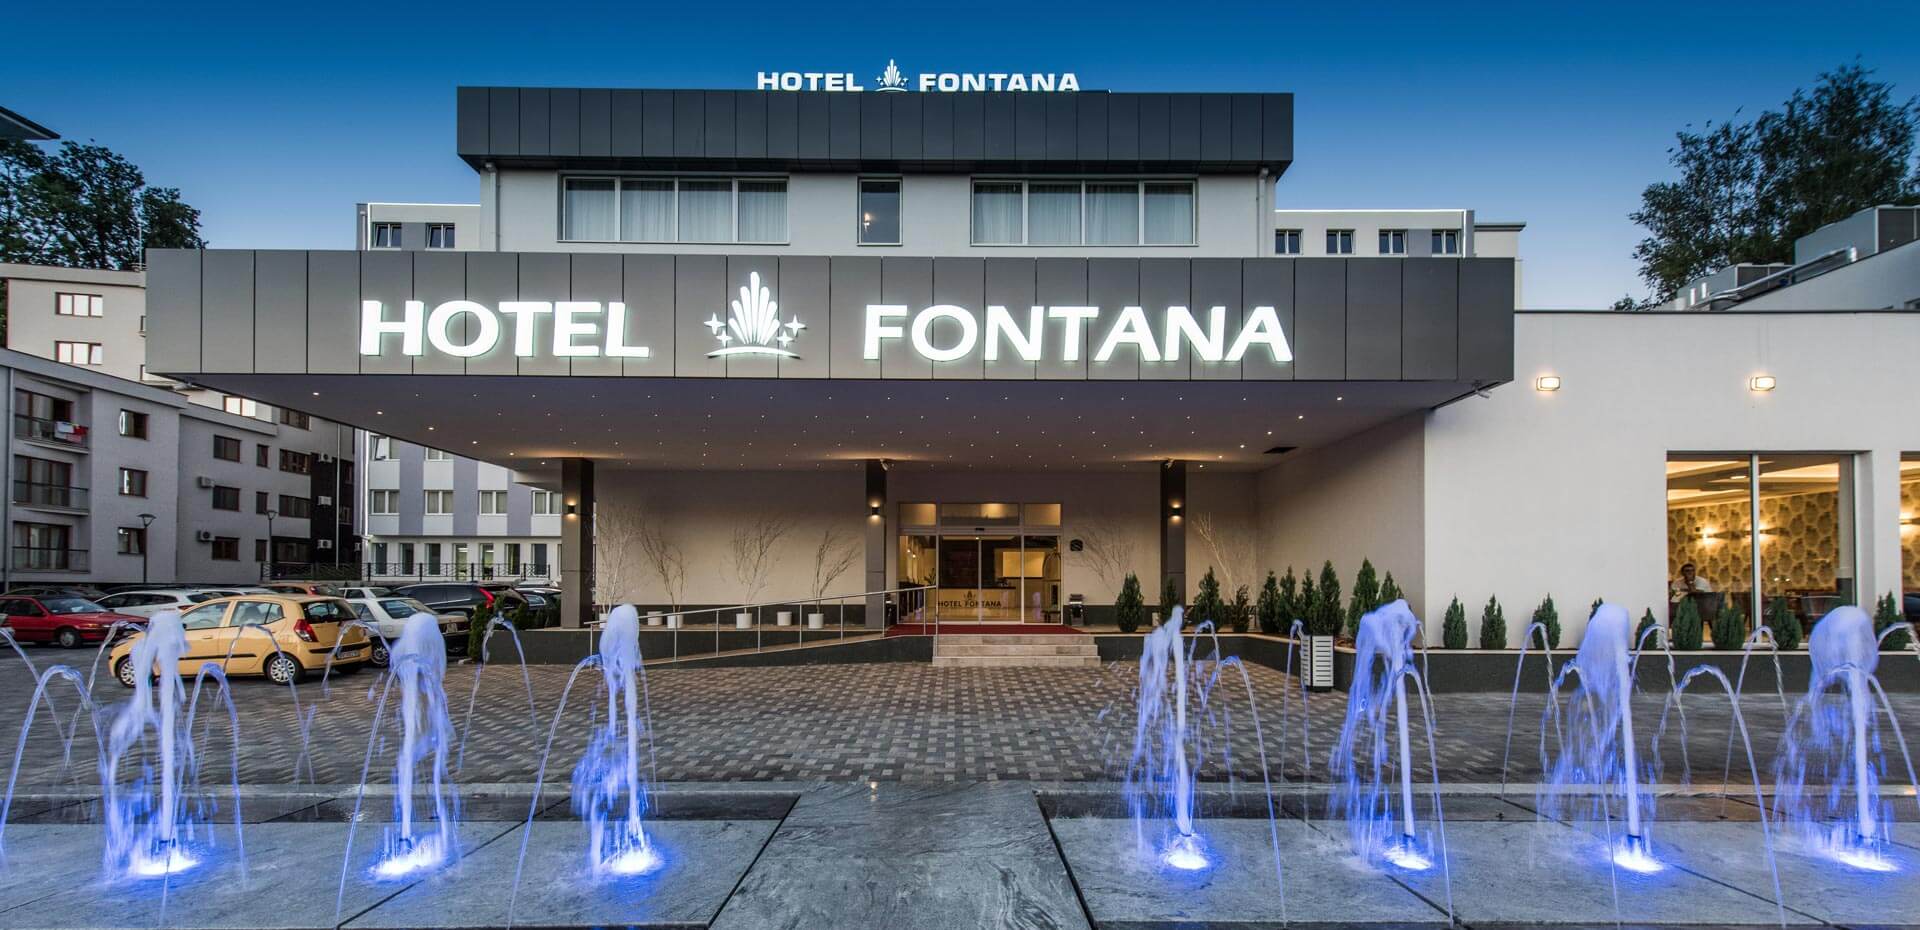 HOTEL FONTANA (1)